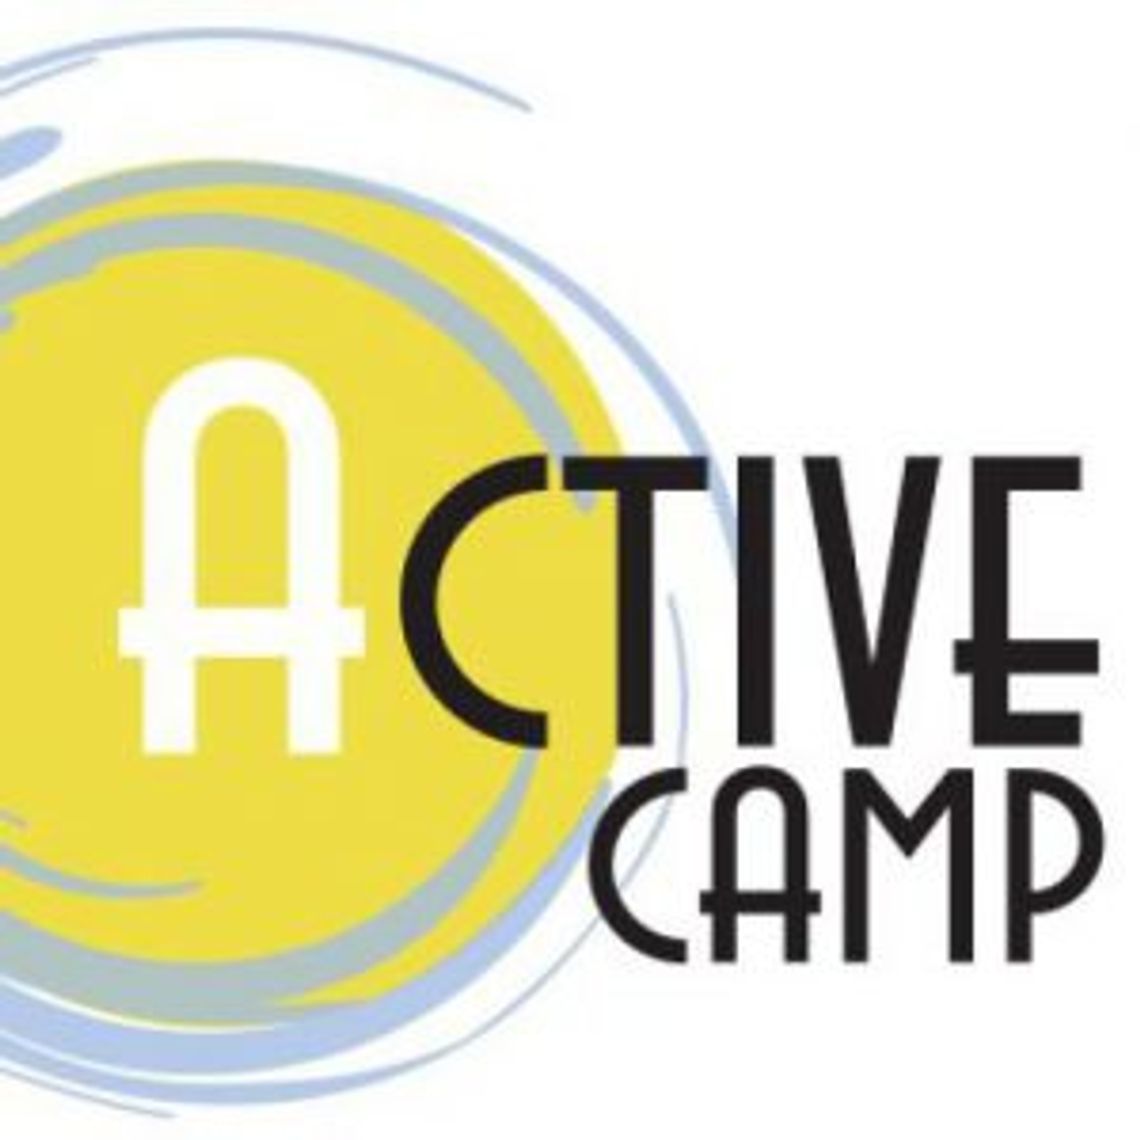 Active Camp